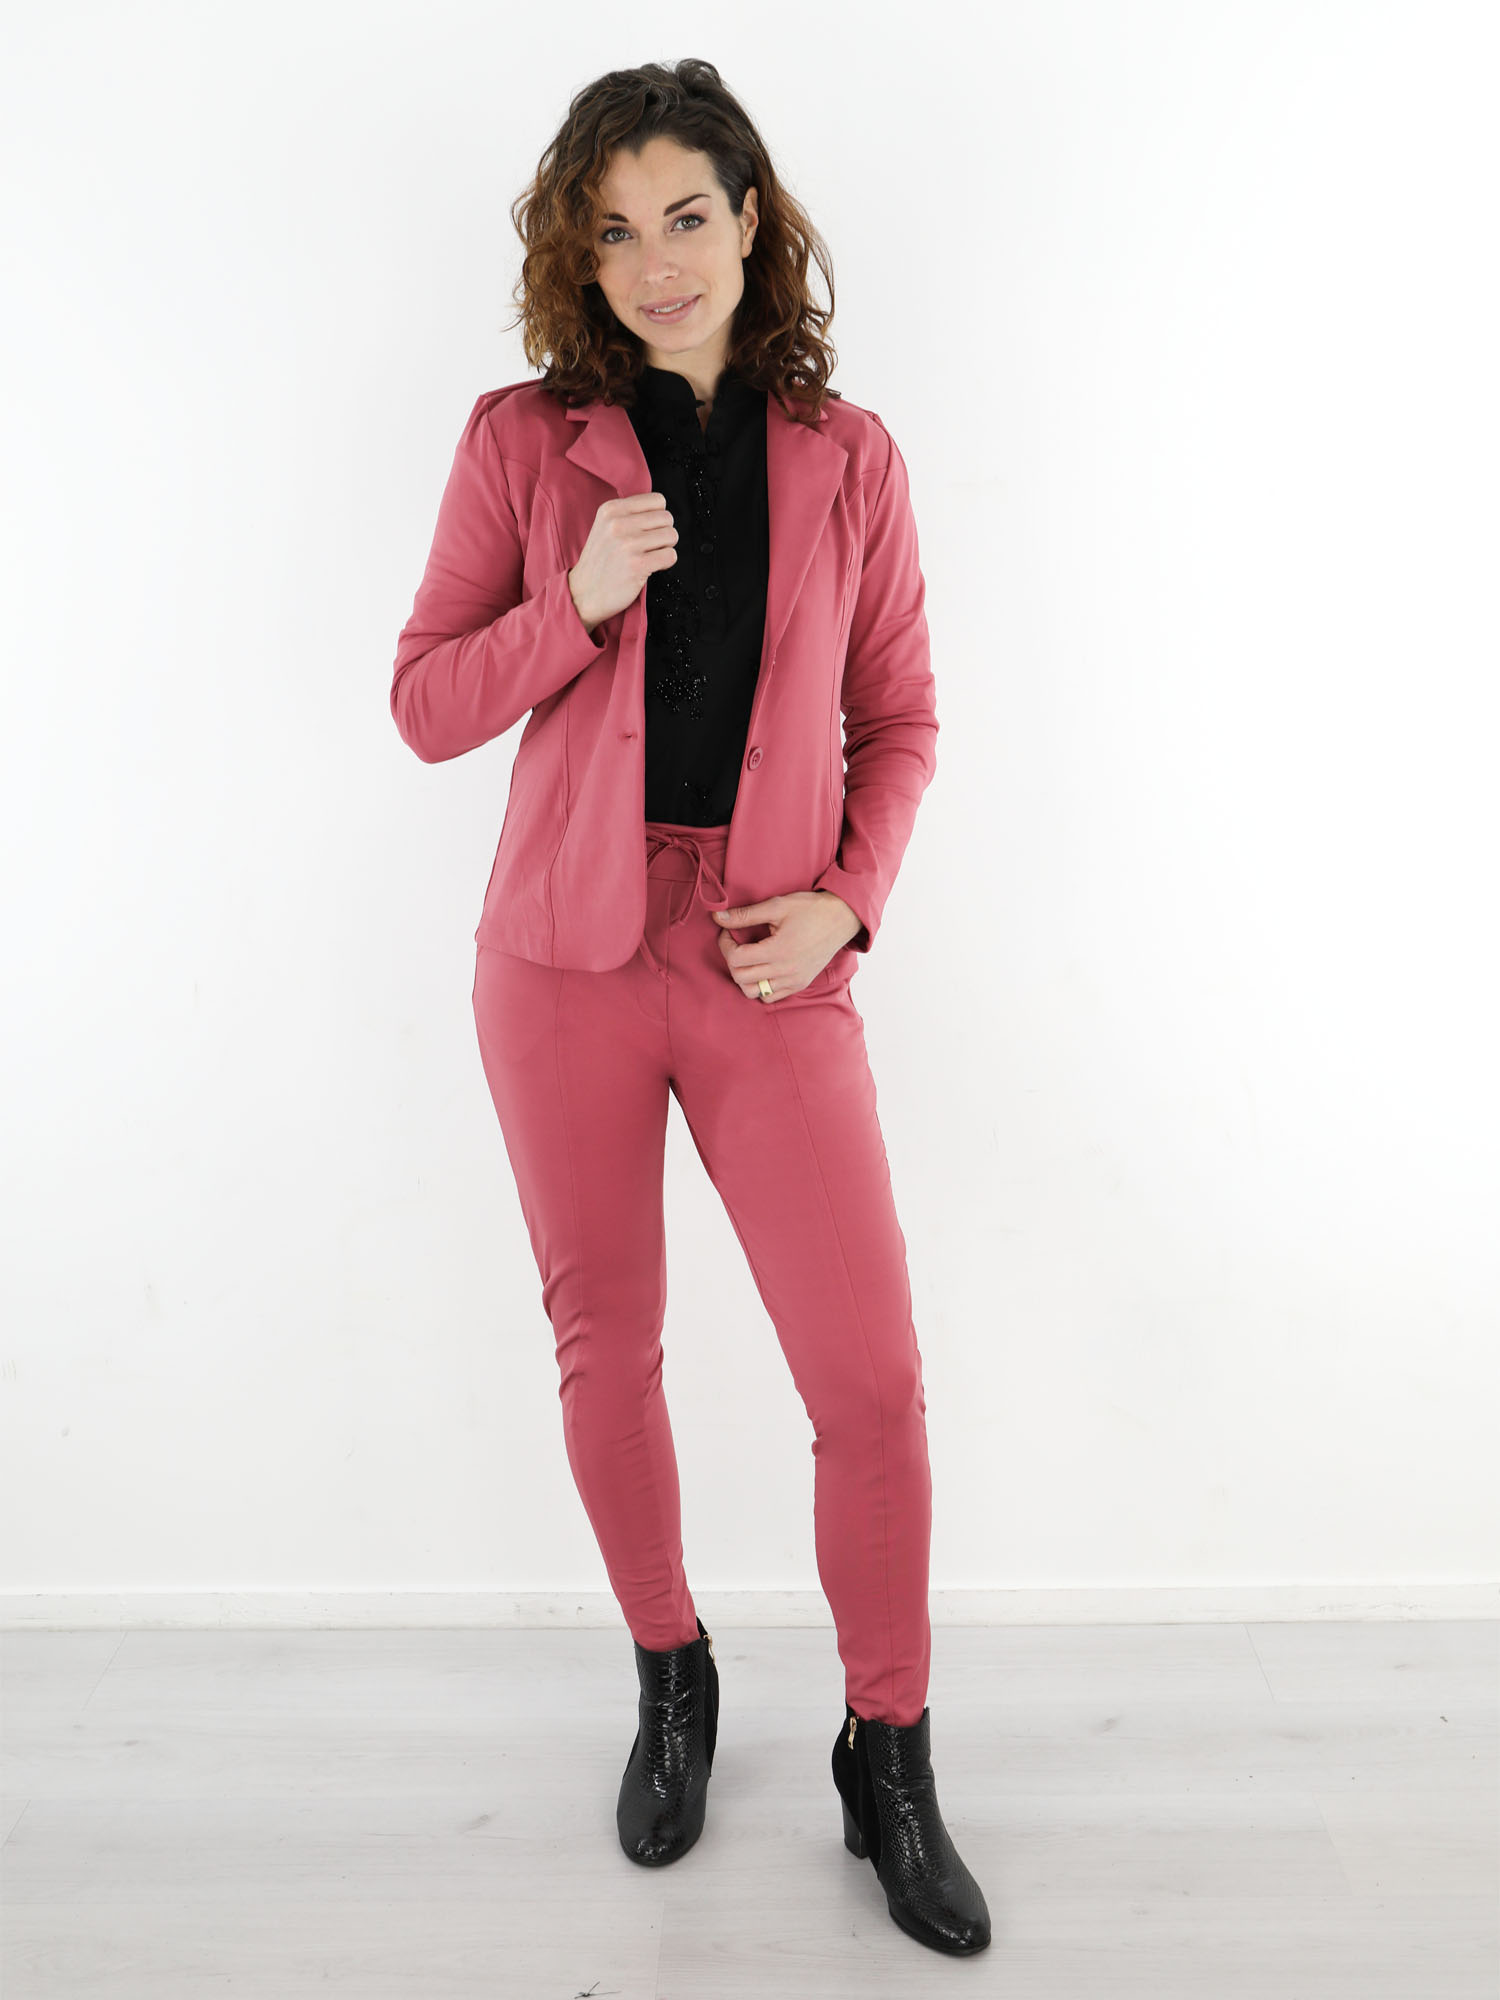 Koloniaal Saai Mars Oud roze travelstof broek van Thombiq - Fashion to Fashion